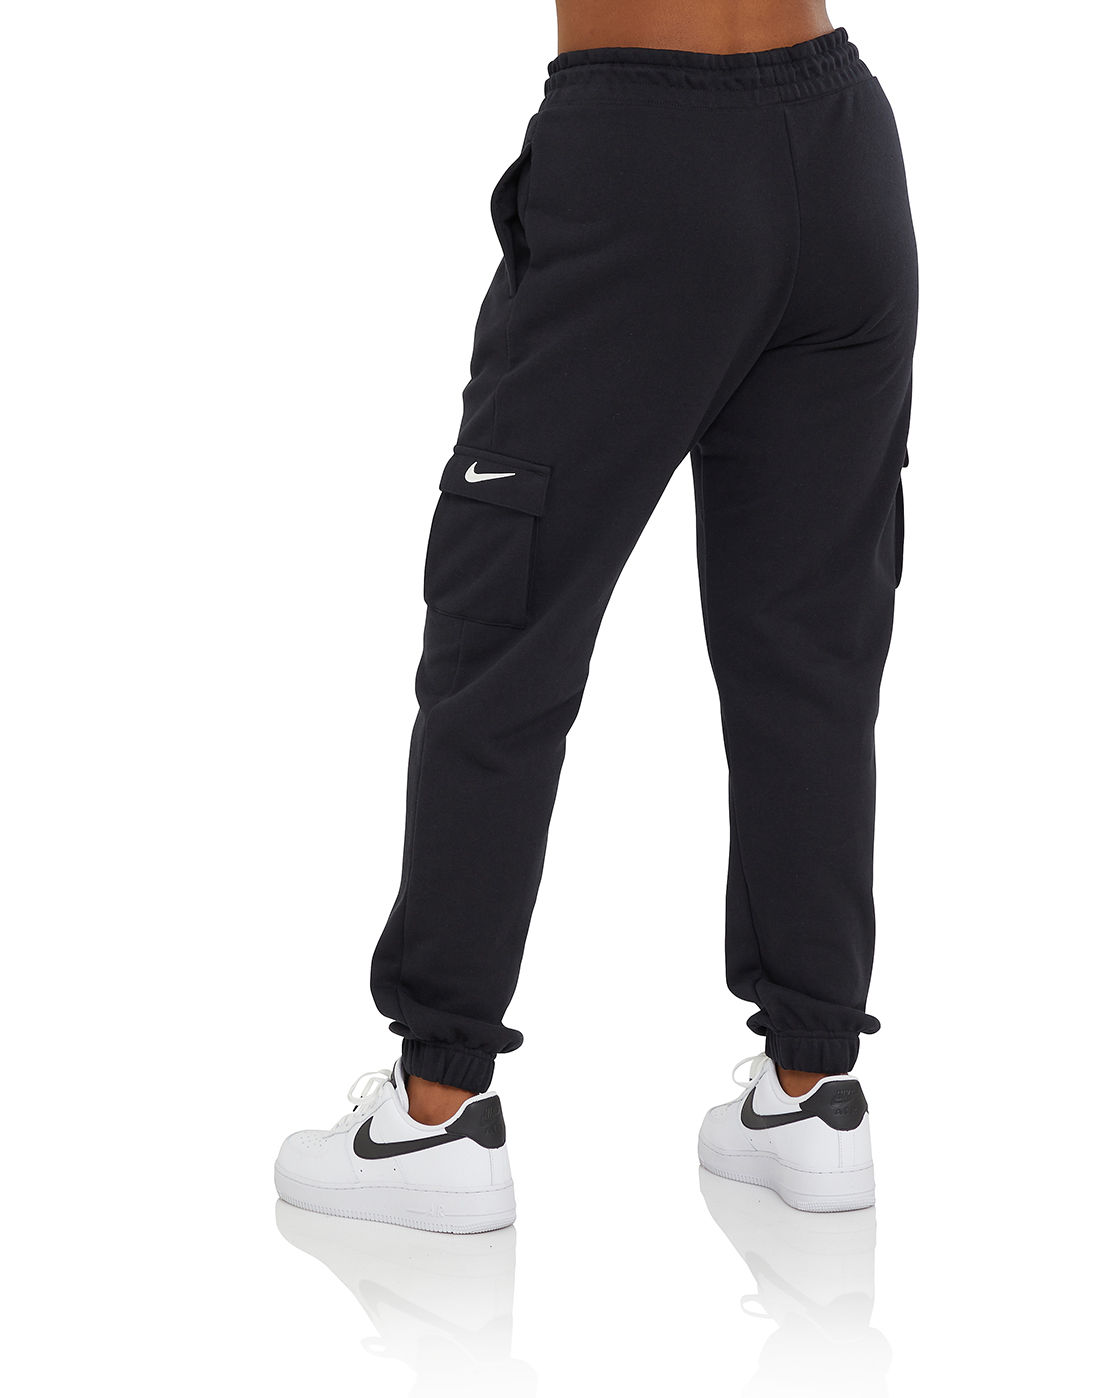 Nike Womens Swoosh Pants - Black | Life Style Sports IE